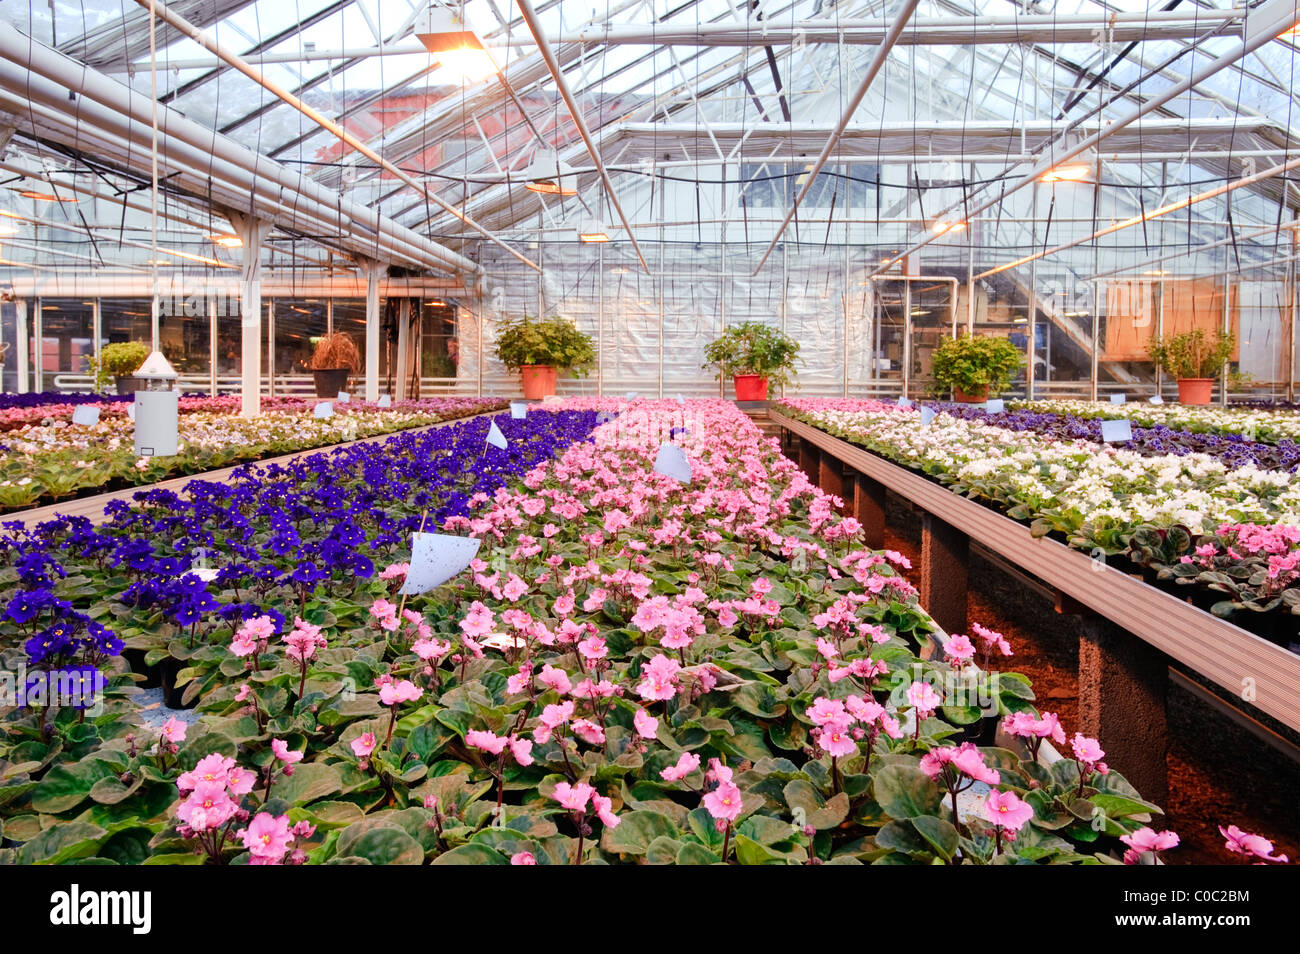 Greenhouse with rows of saintpaulia plants Stock Photo